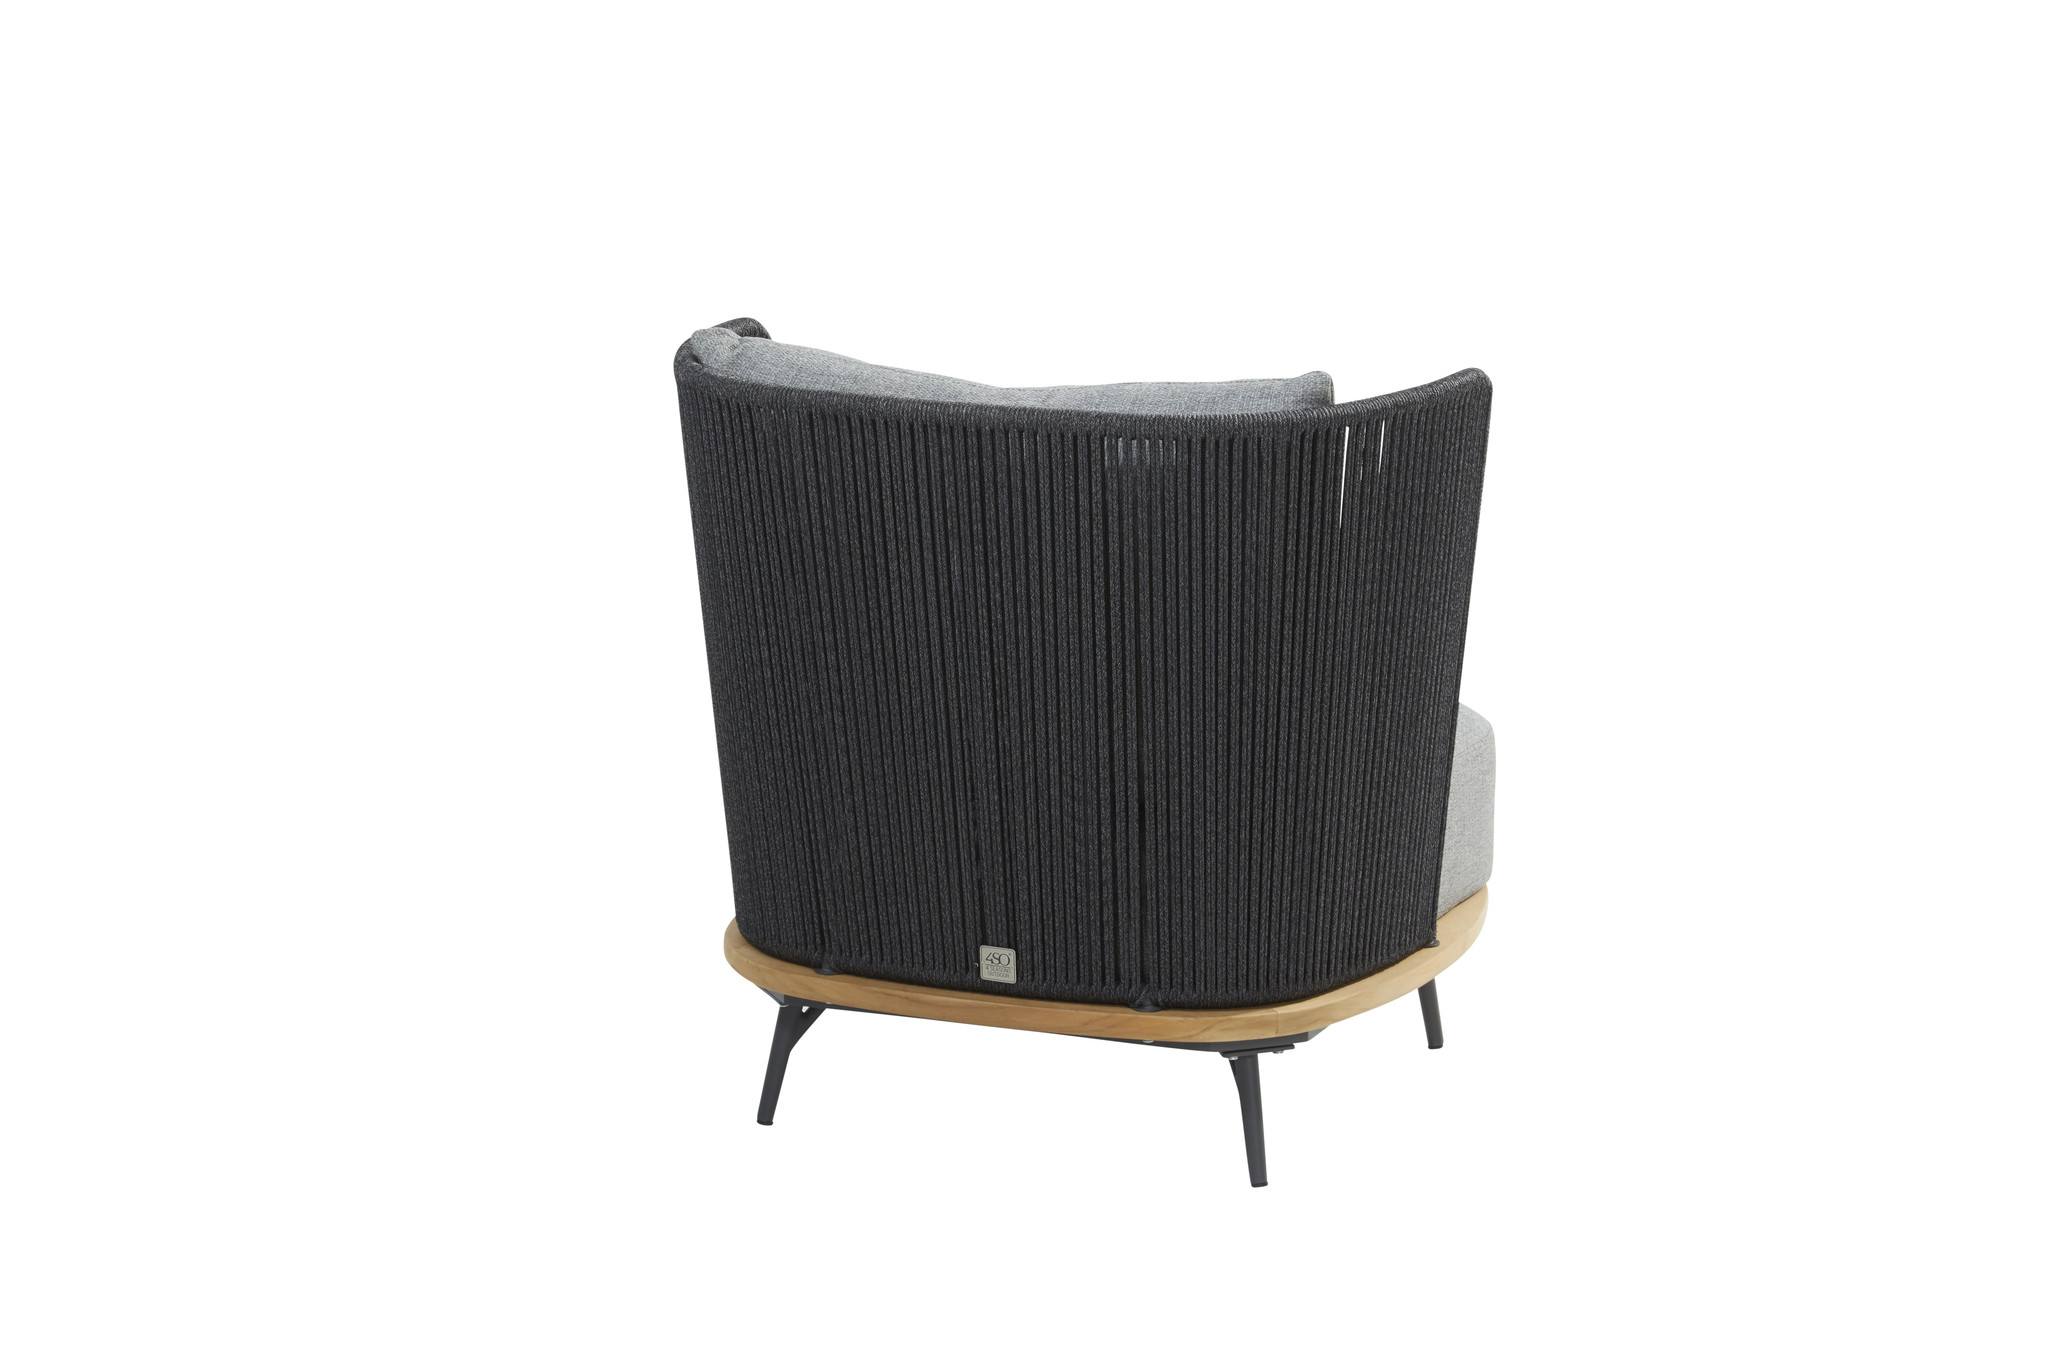 4 Seasons | gascylinders living | Positano outdoor | mattress - furniture chair Springbed Outdoor